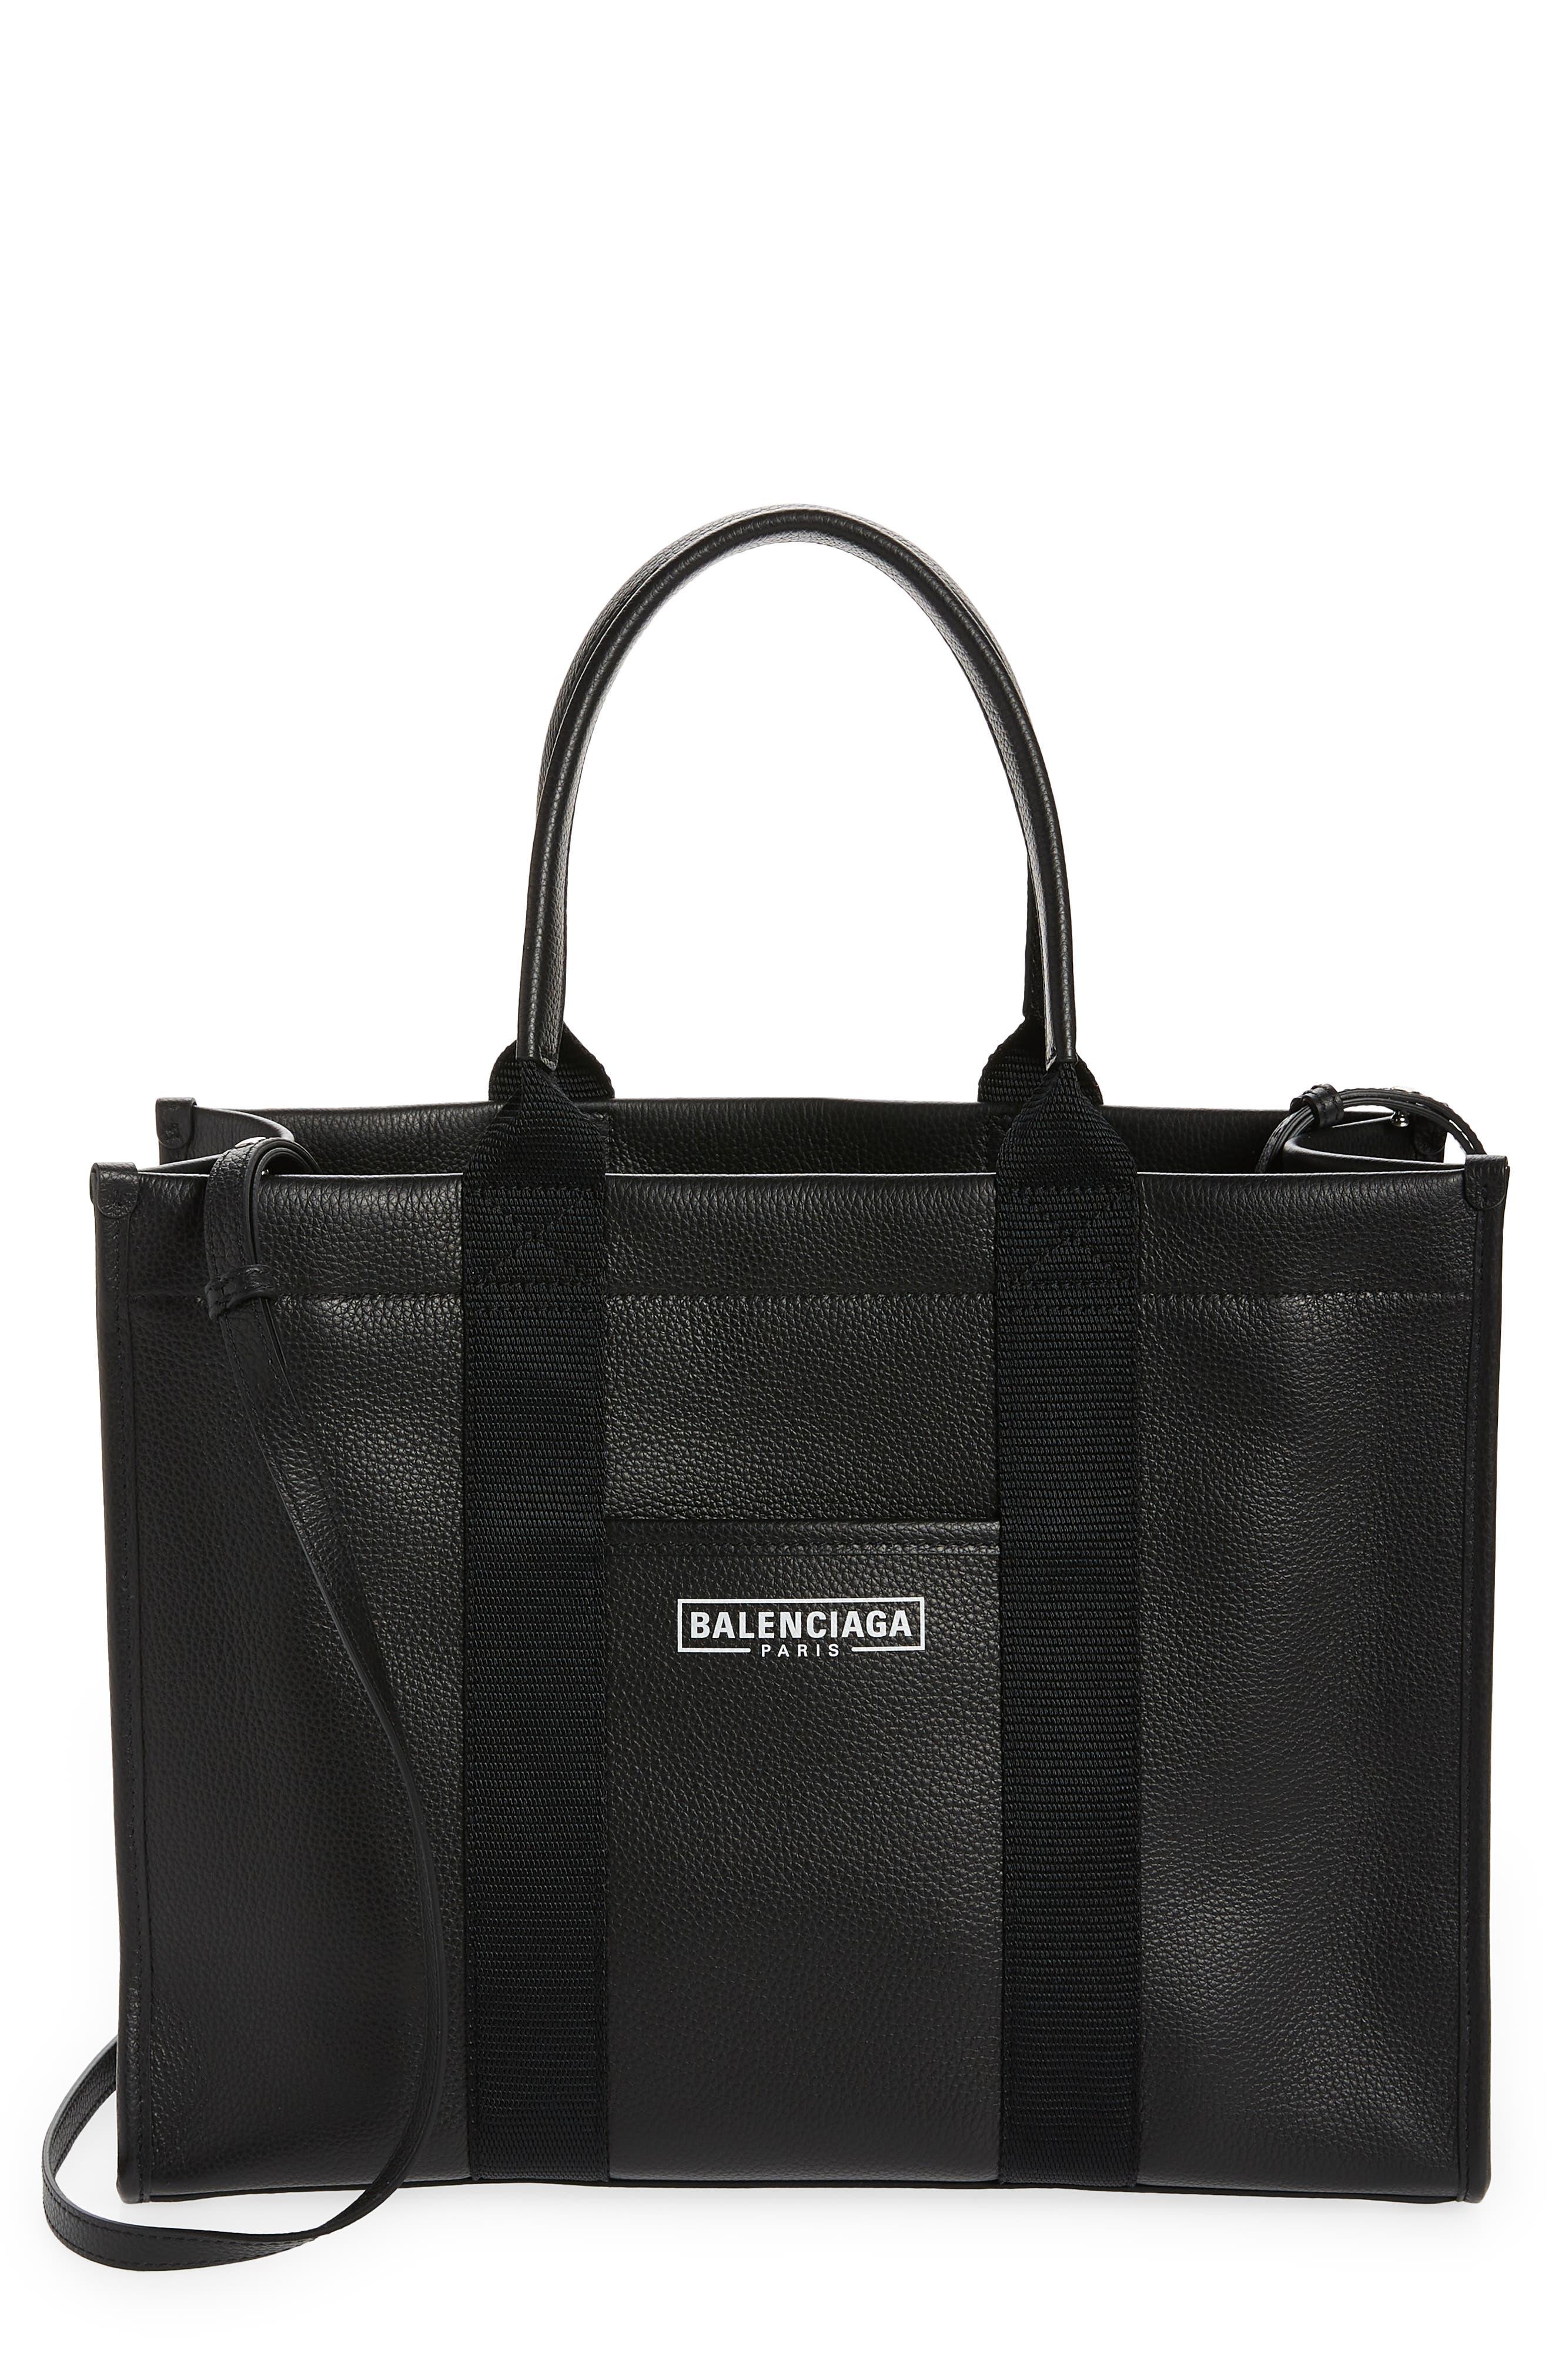 Balenciaga Hardware Leather Tote in Black | Lyst